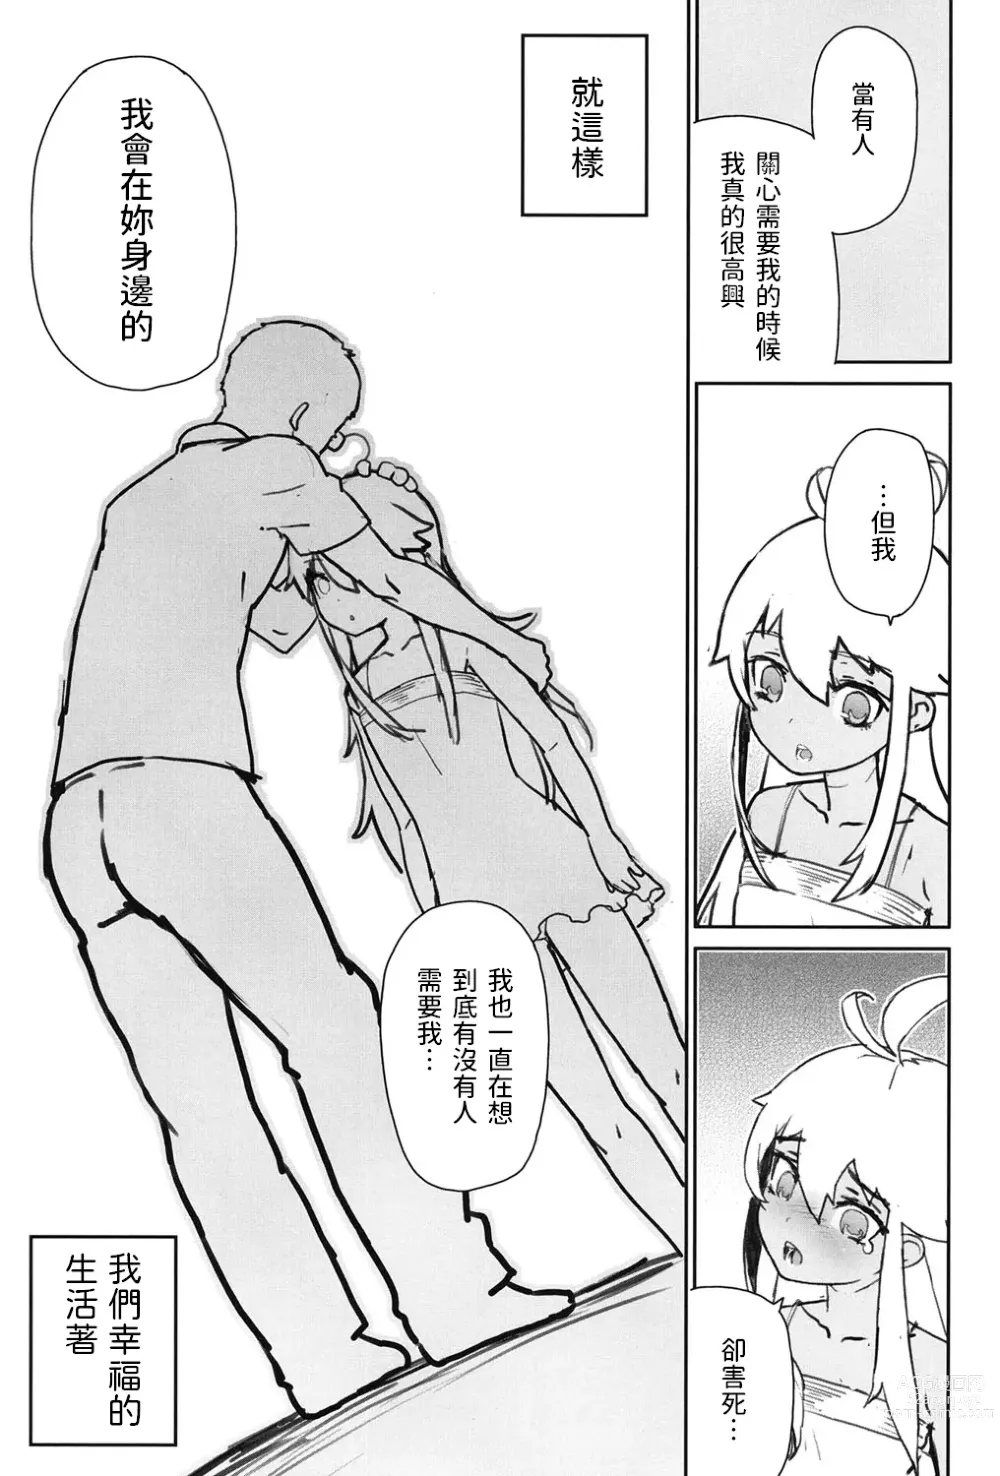 Page 27 of manga Tasatsu Tour